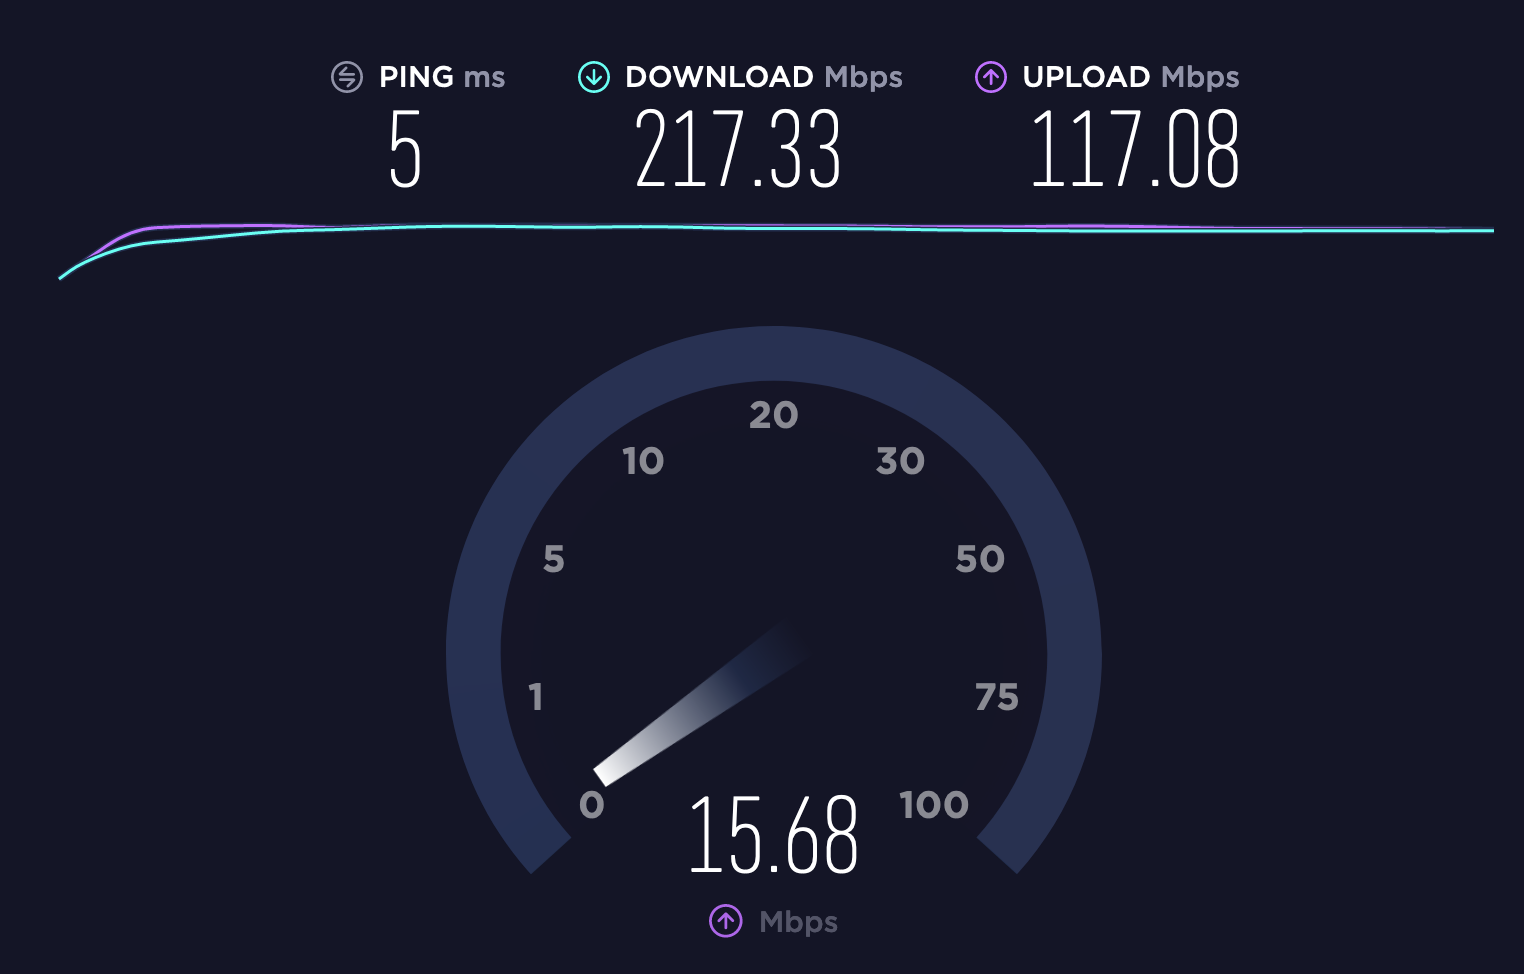 sky broadband download speed test